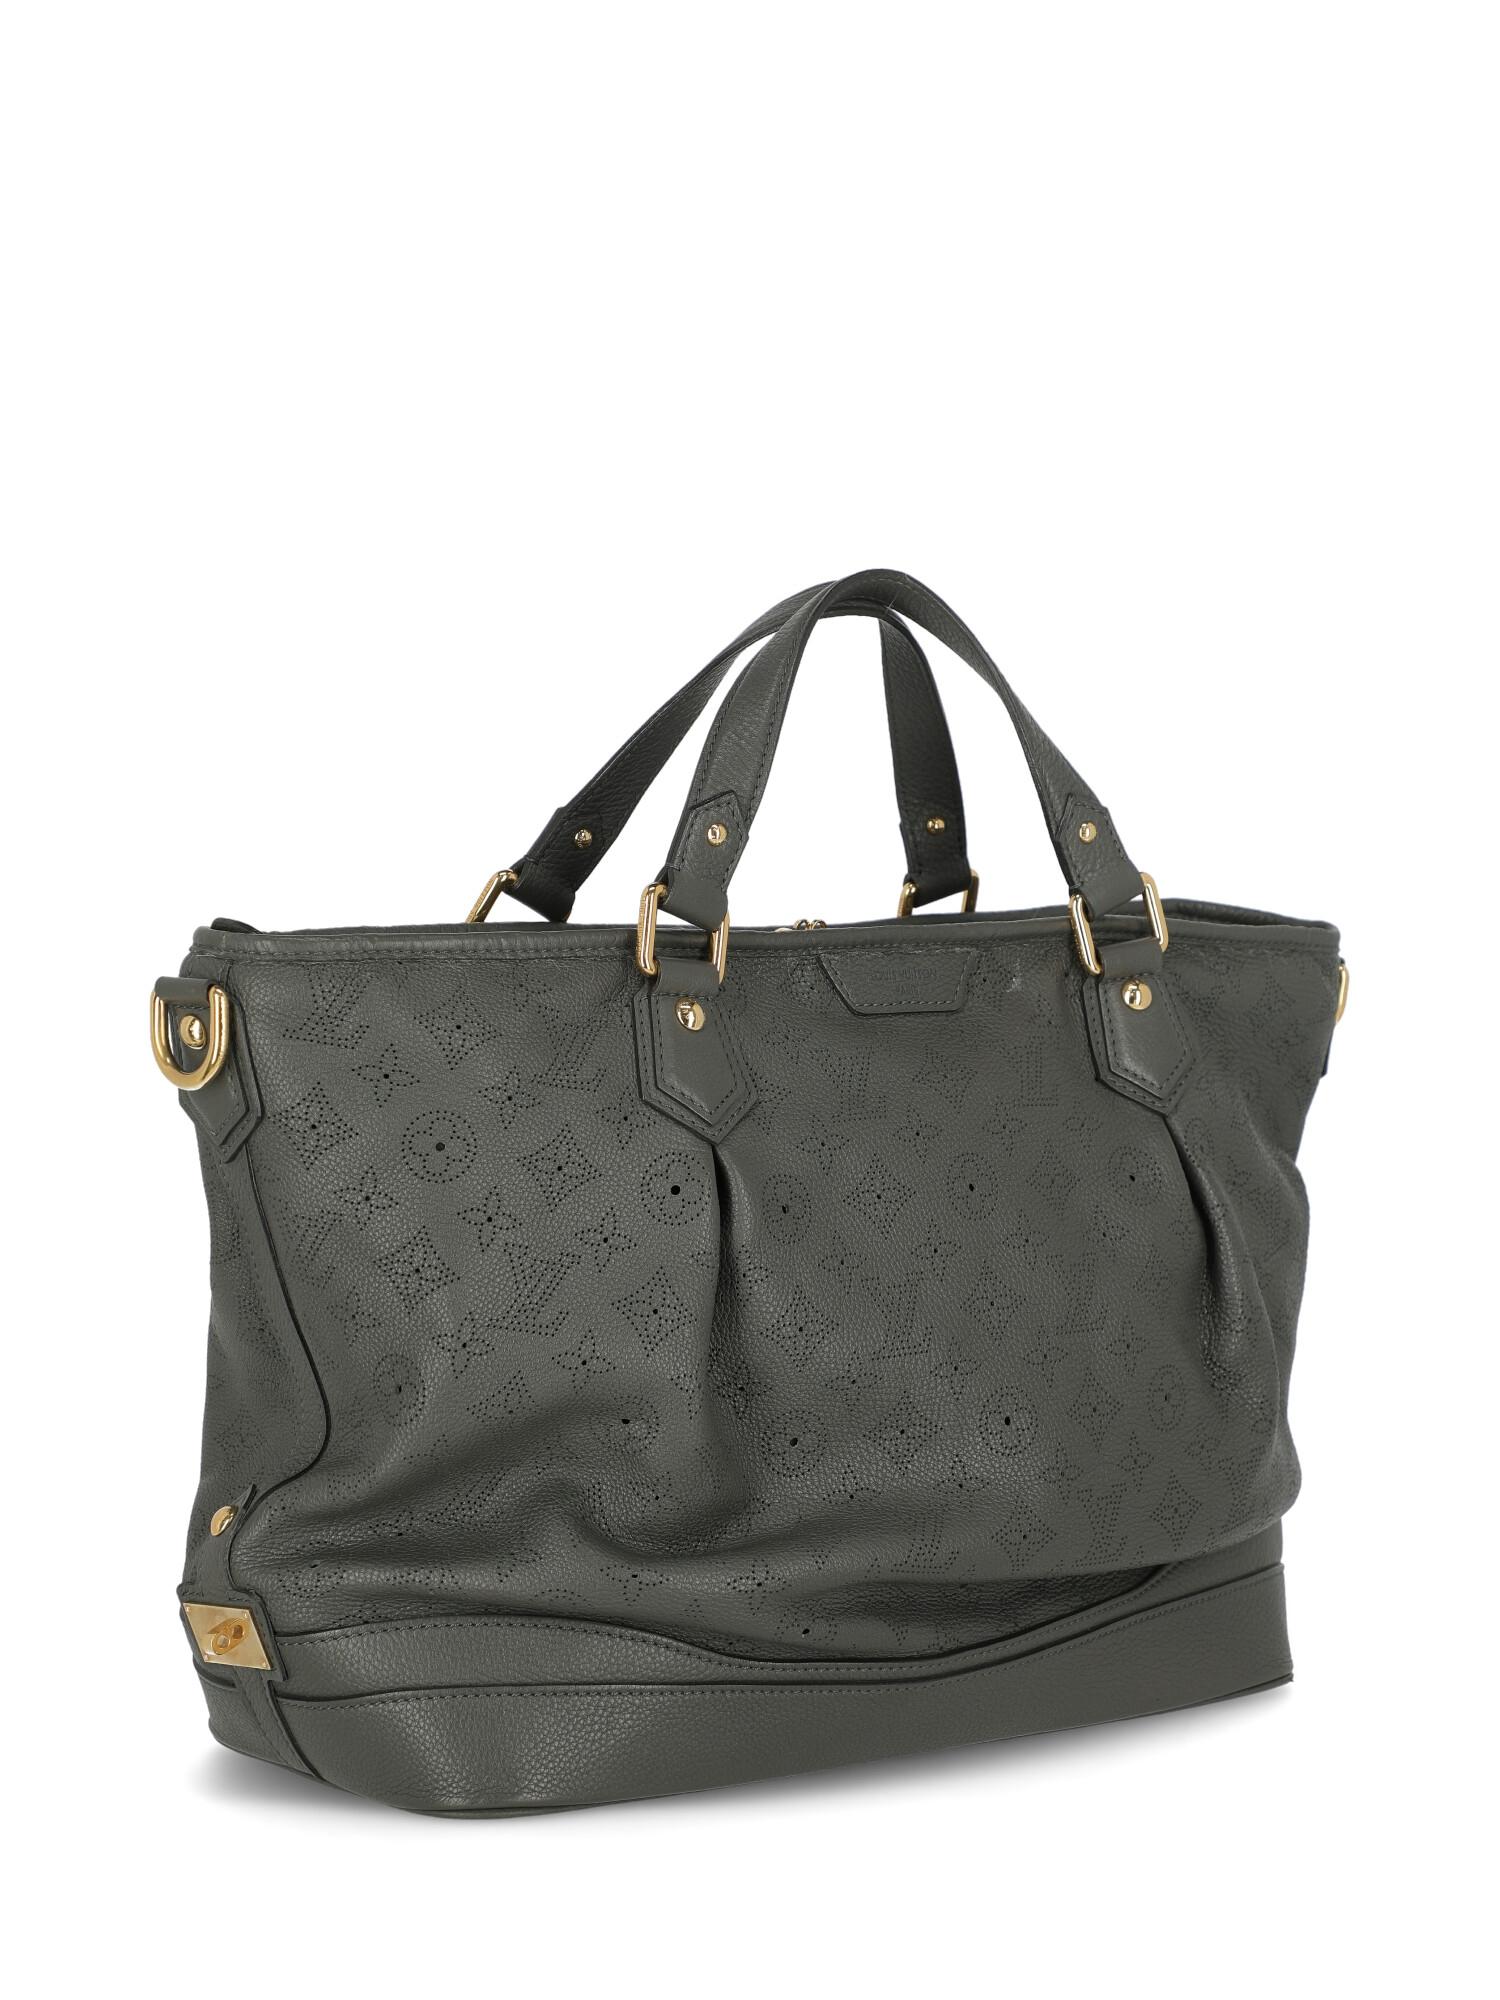 Black Louis Vuitton Woman Handbag Mahina Grey Leather For Sale